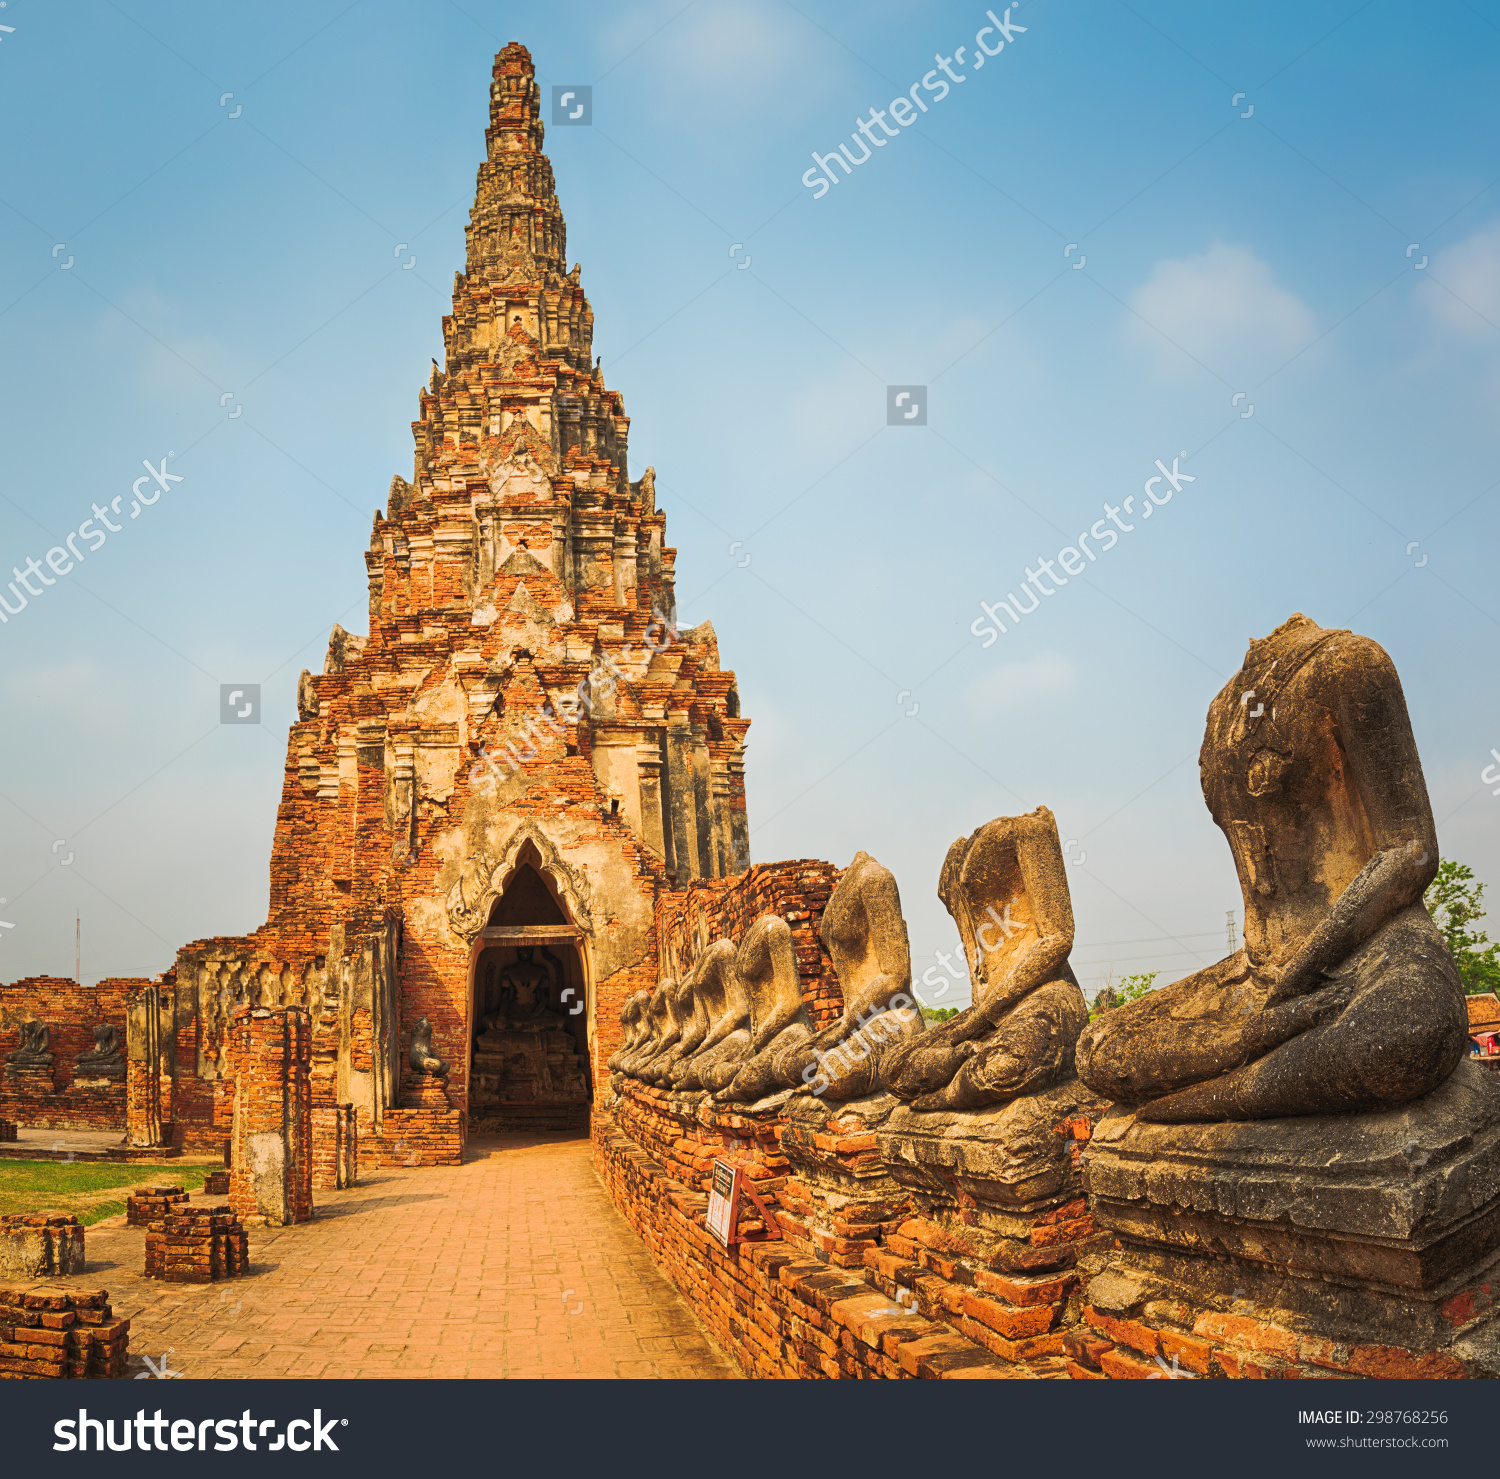 Headless Buddhas Statues Wat Chaiwatthanaram Ayutthaya Stock Photo.